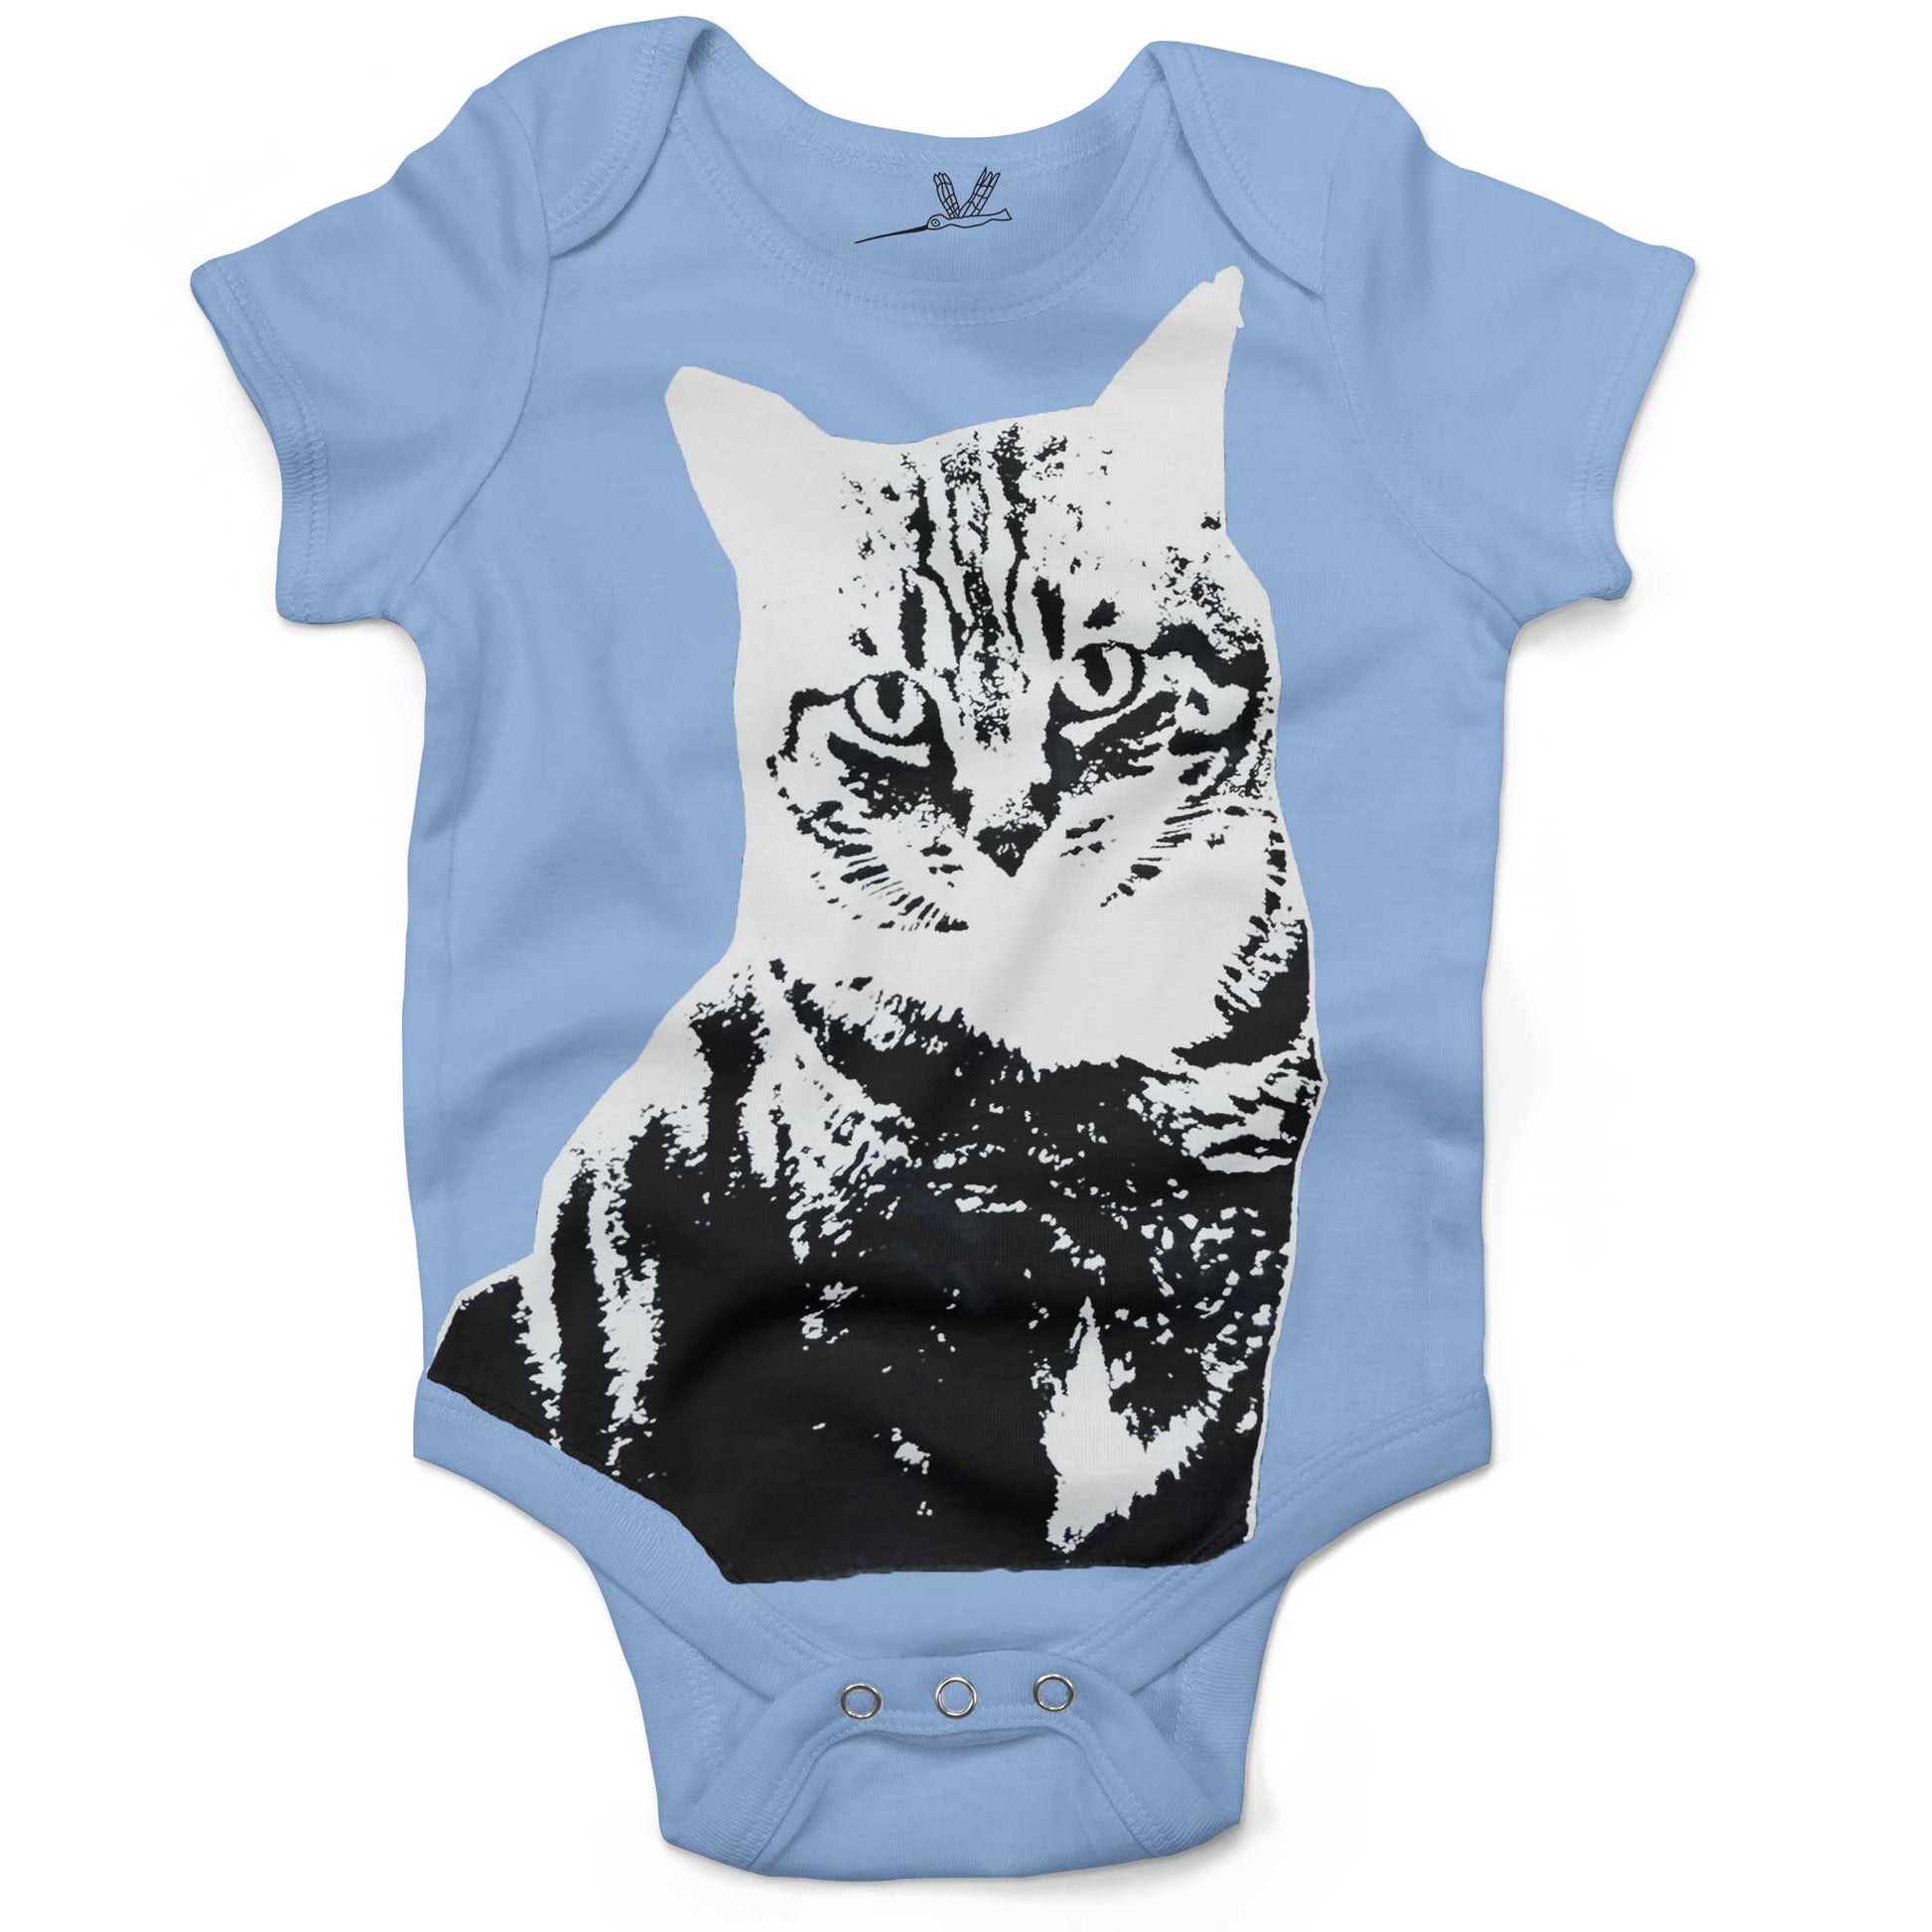 Black & White Cat Infant Bodysuit or Raglan Baby Tee-Organic Baby Blue-3-6 months